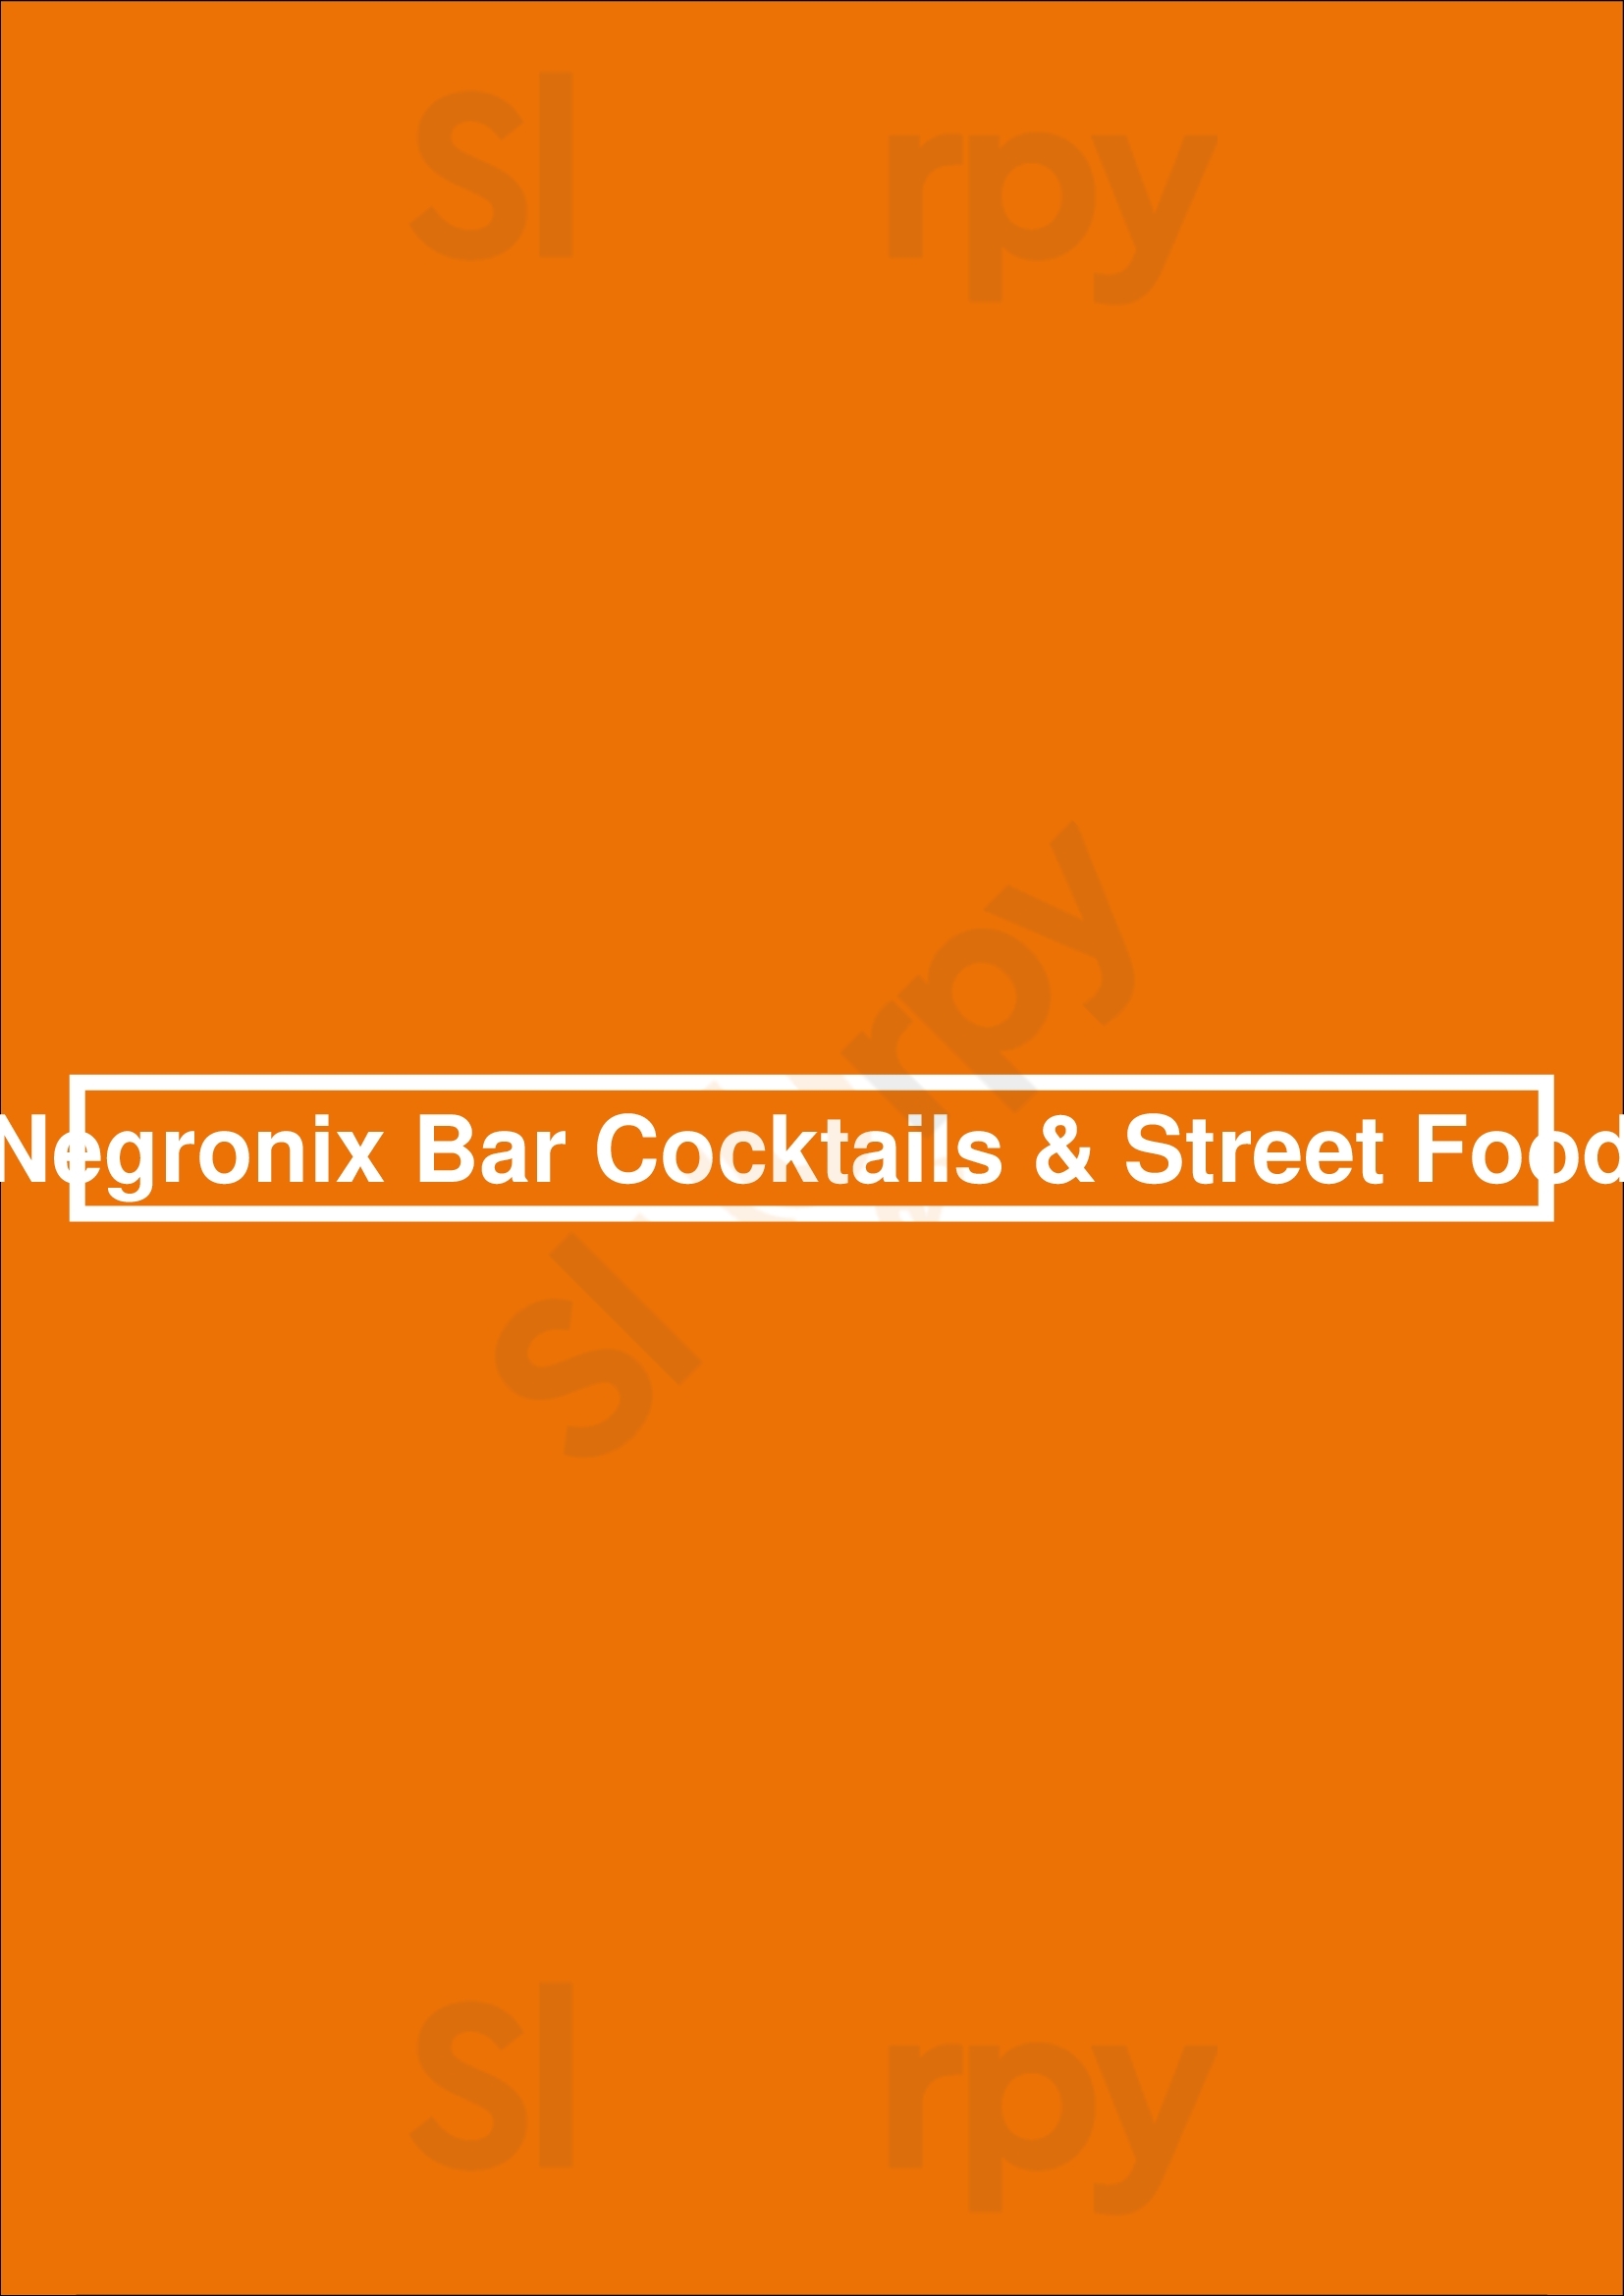 Negronix Bar Cocktails & Street Food Barcelona Menu - 1